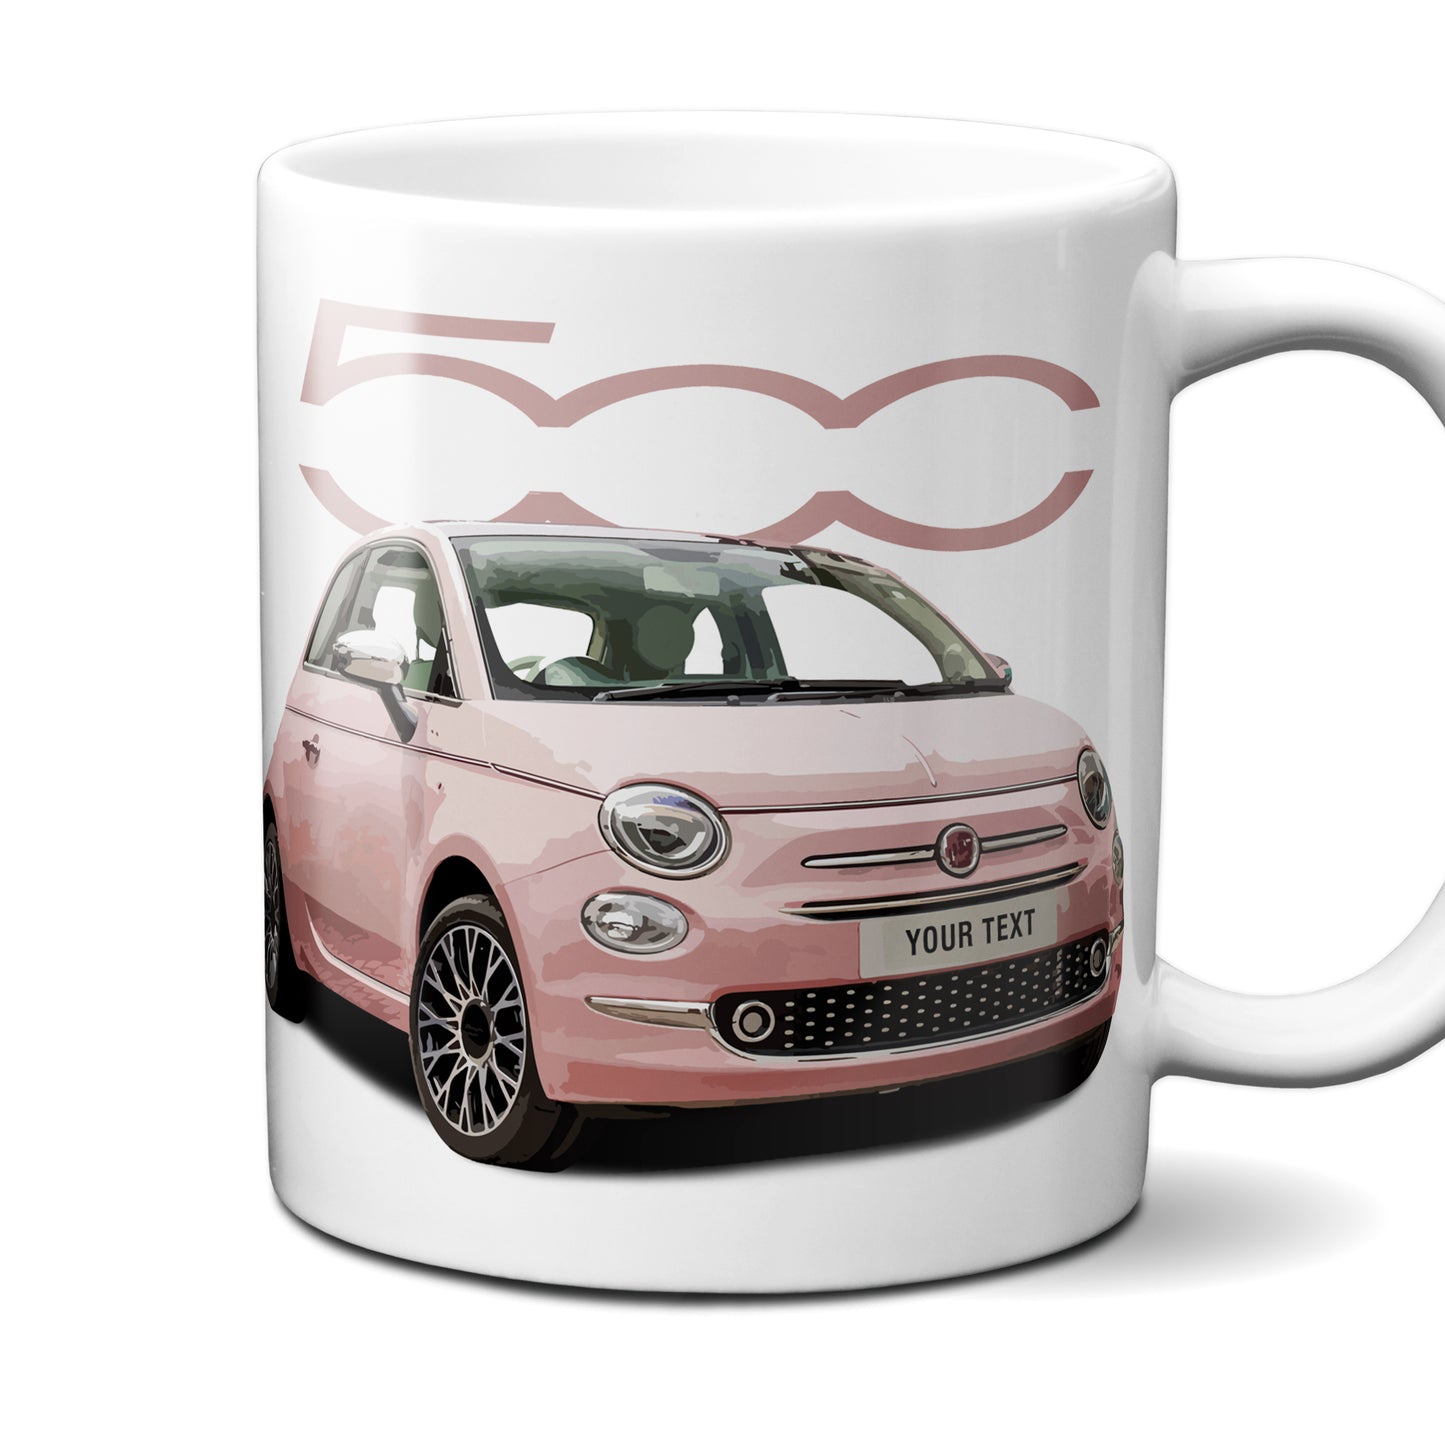 Personalised Fiat 500 Mug Gift - 7 Colour Options